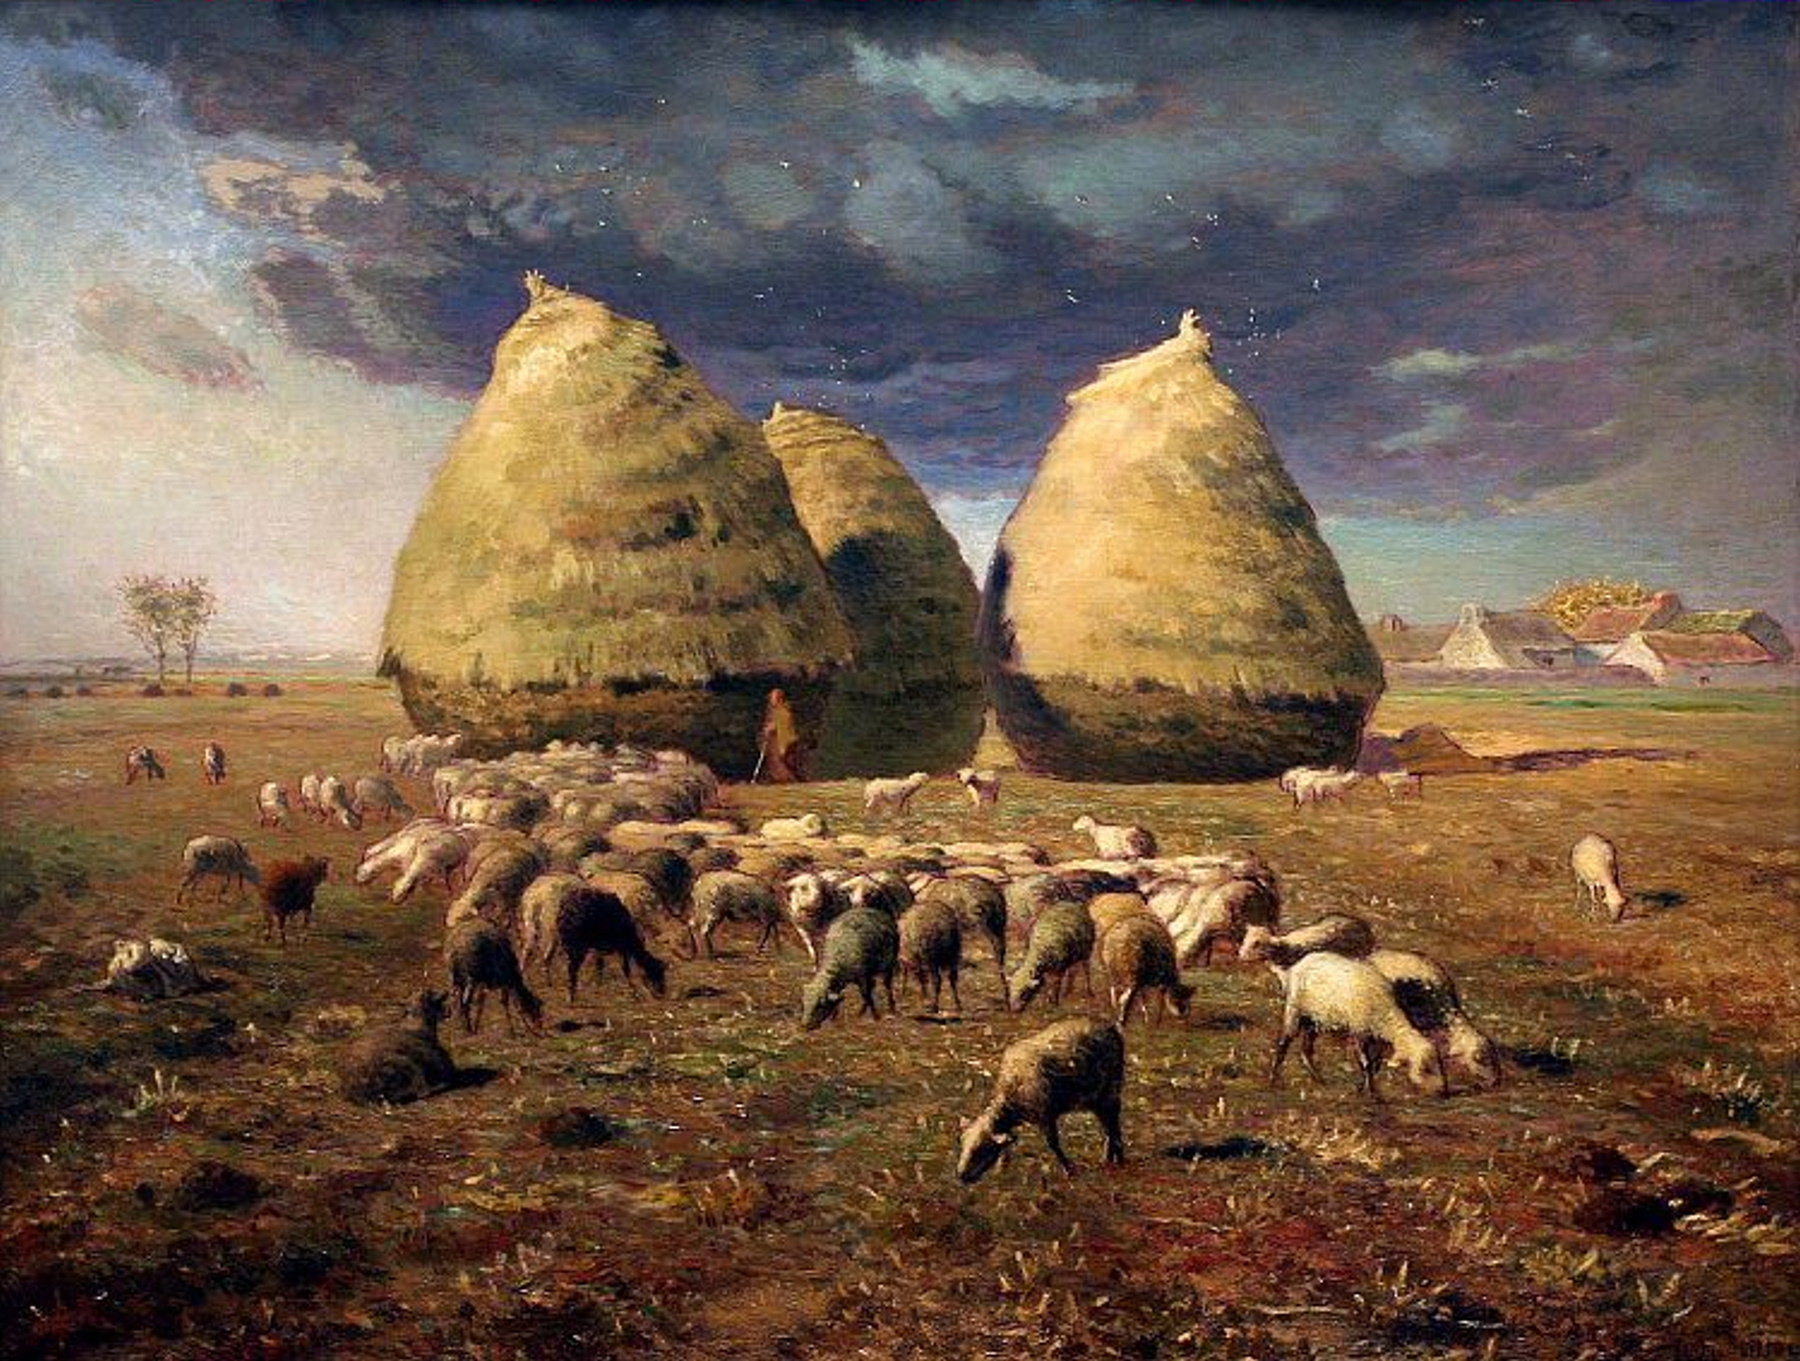 Montes de Feno: Outono by Jean-François Millet - c. 1874 